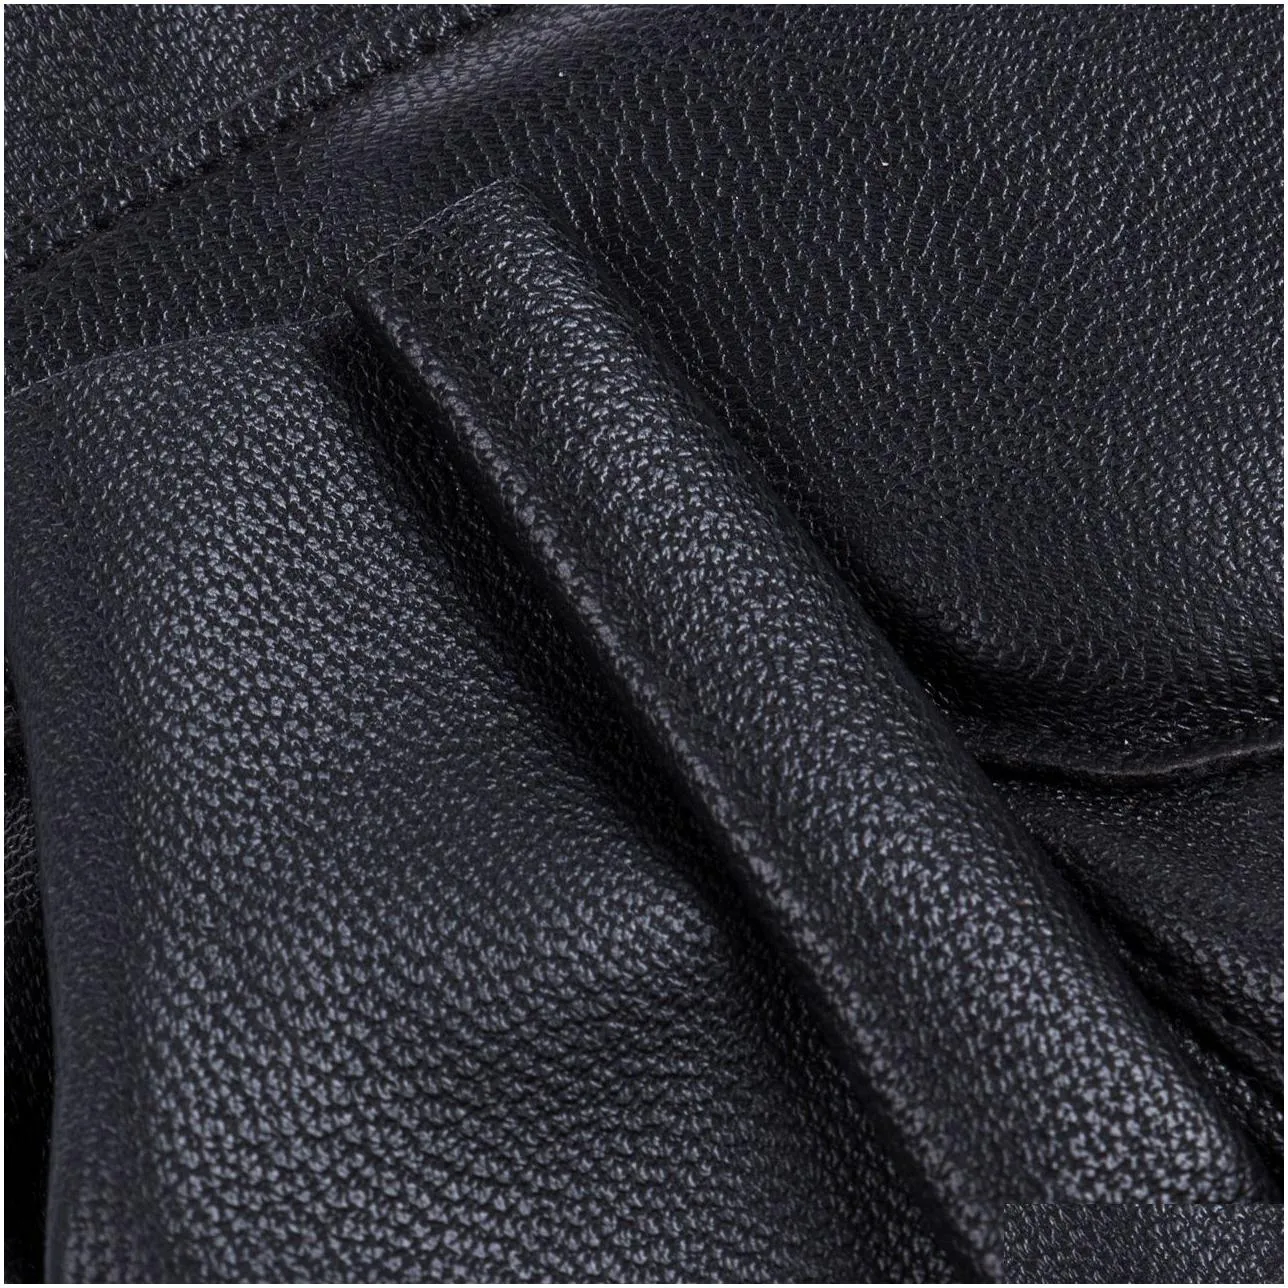 2019 NEW Fashion Men039s Leather Gloves Half Finger Fingerless Stage Sports Driving Solid Black Gloves3862185